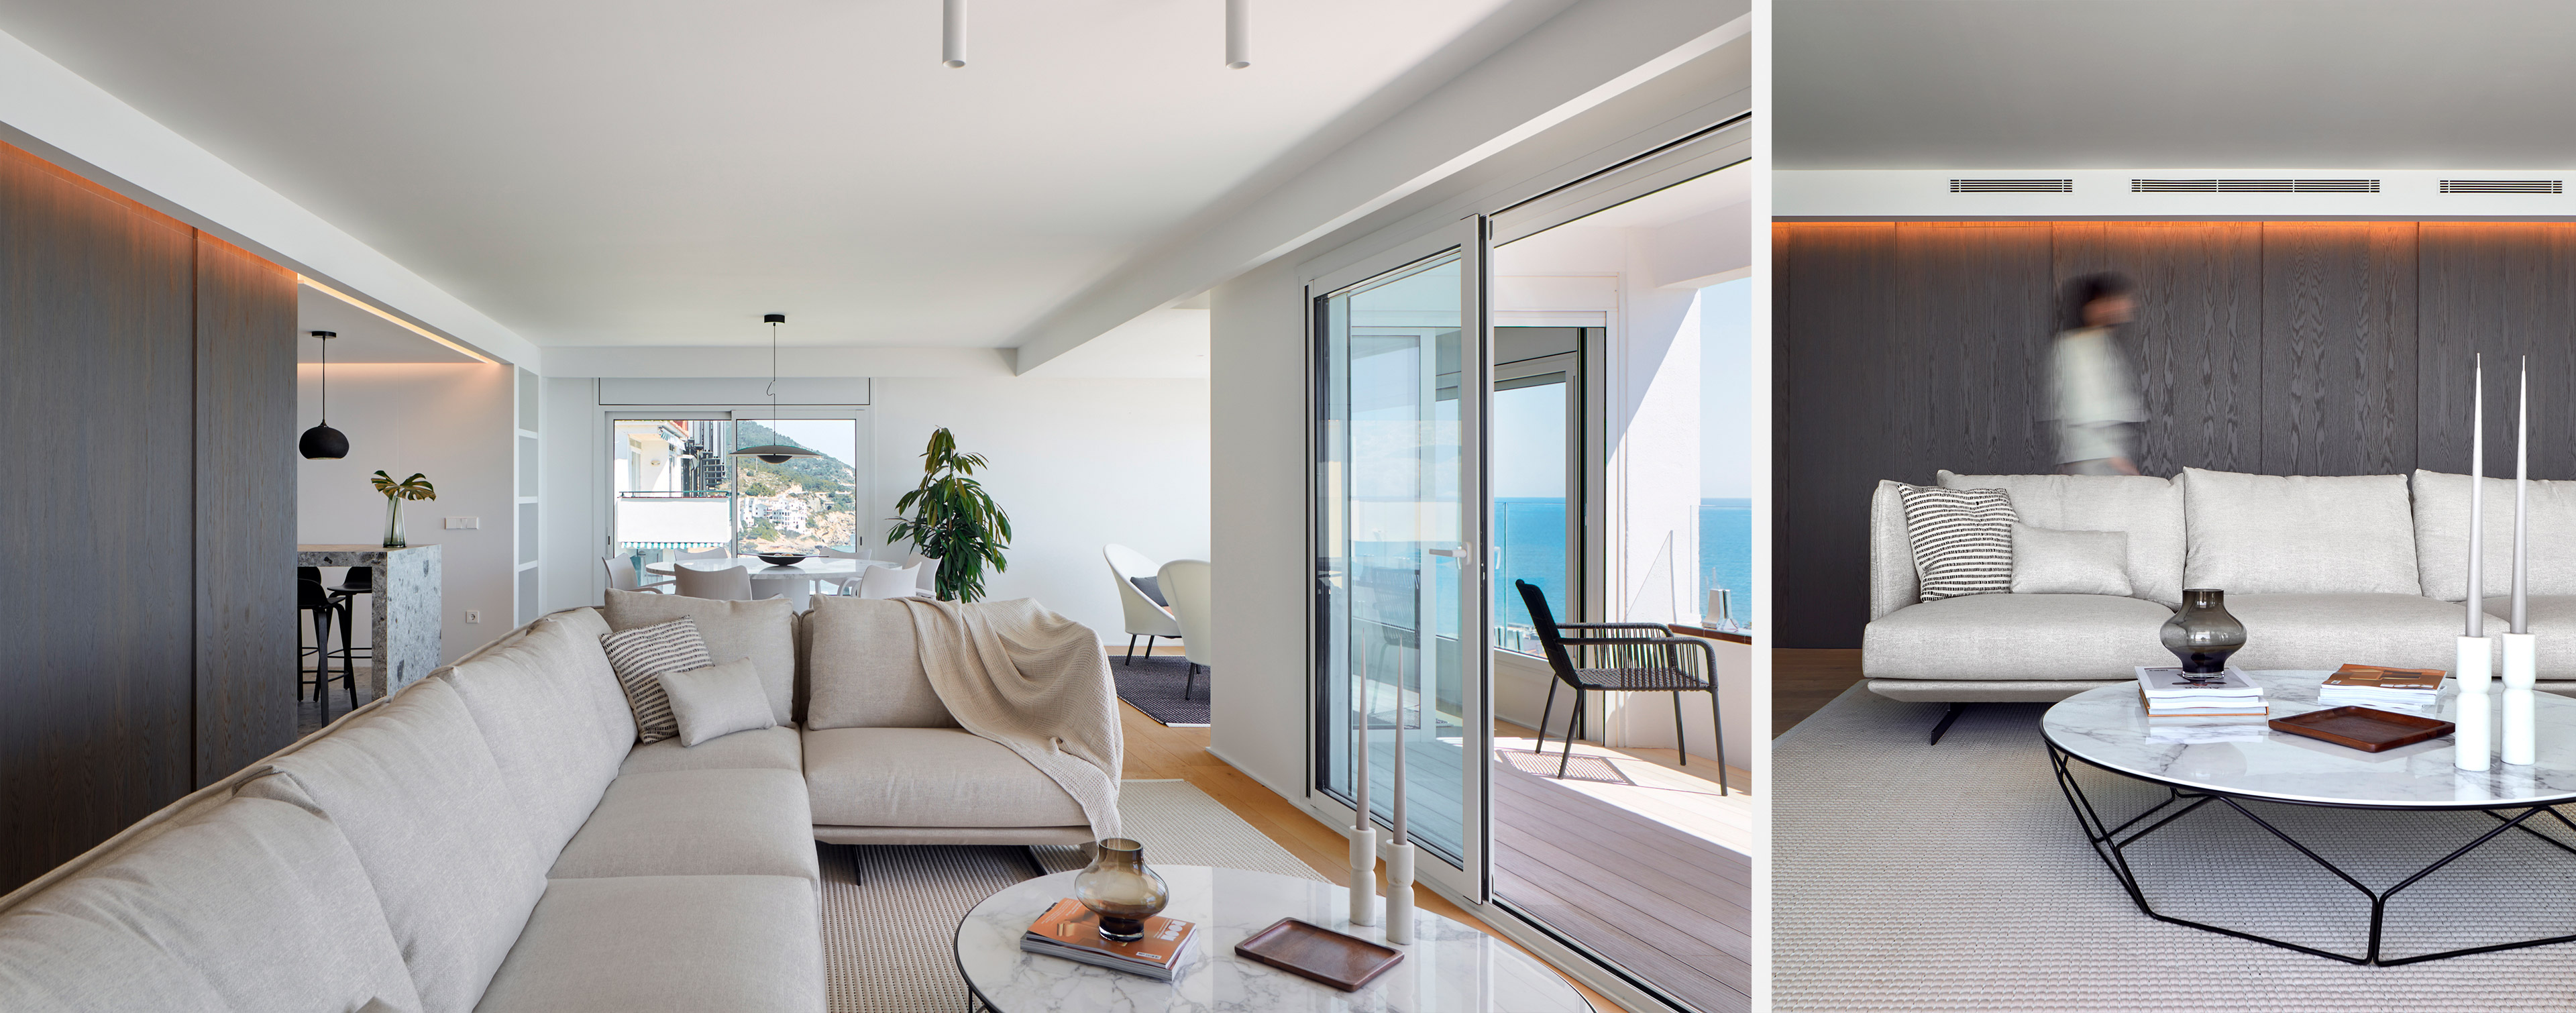 luv studio luxury architects sitges apartment IMG 02 - LUV Studio - Architecture et design - Barcelone